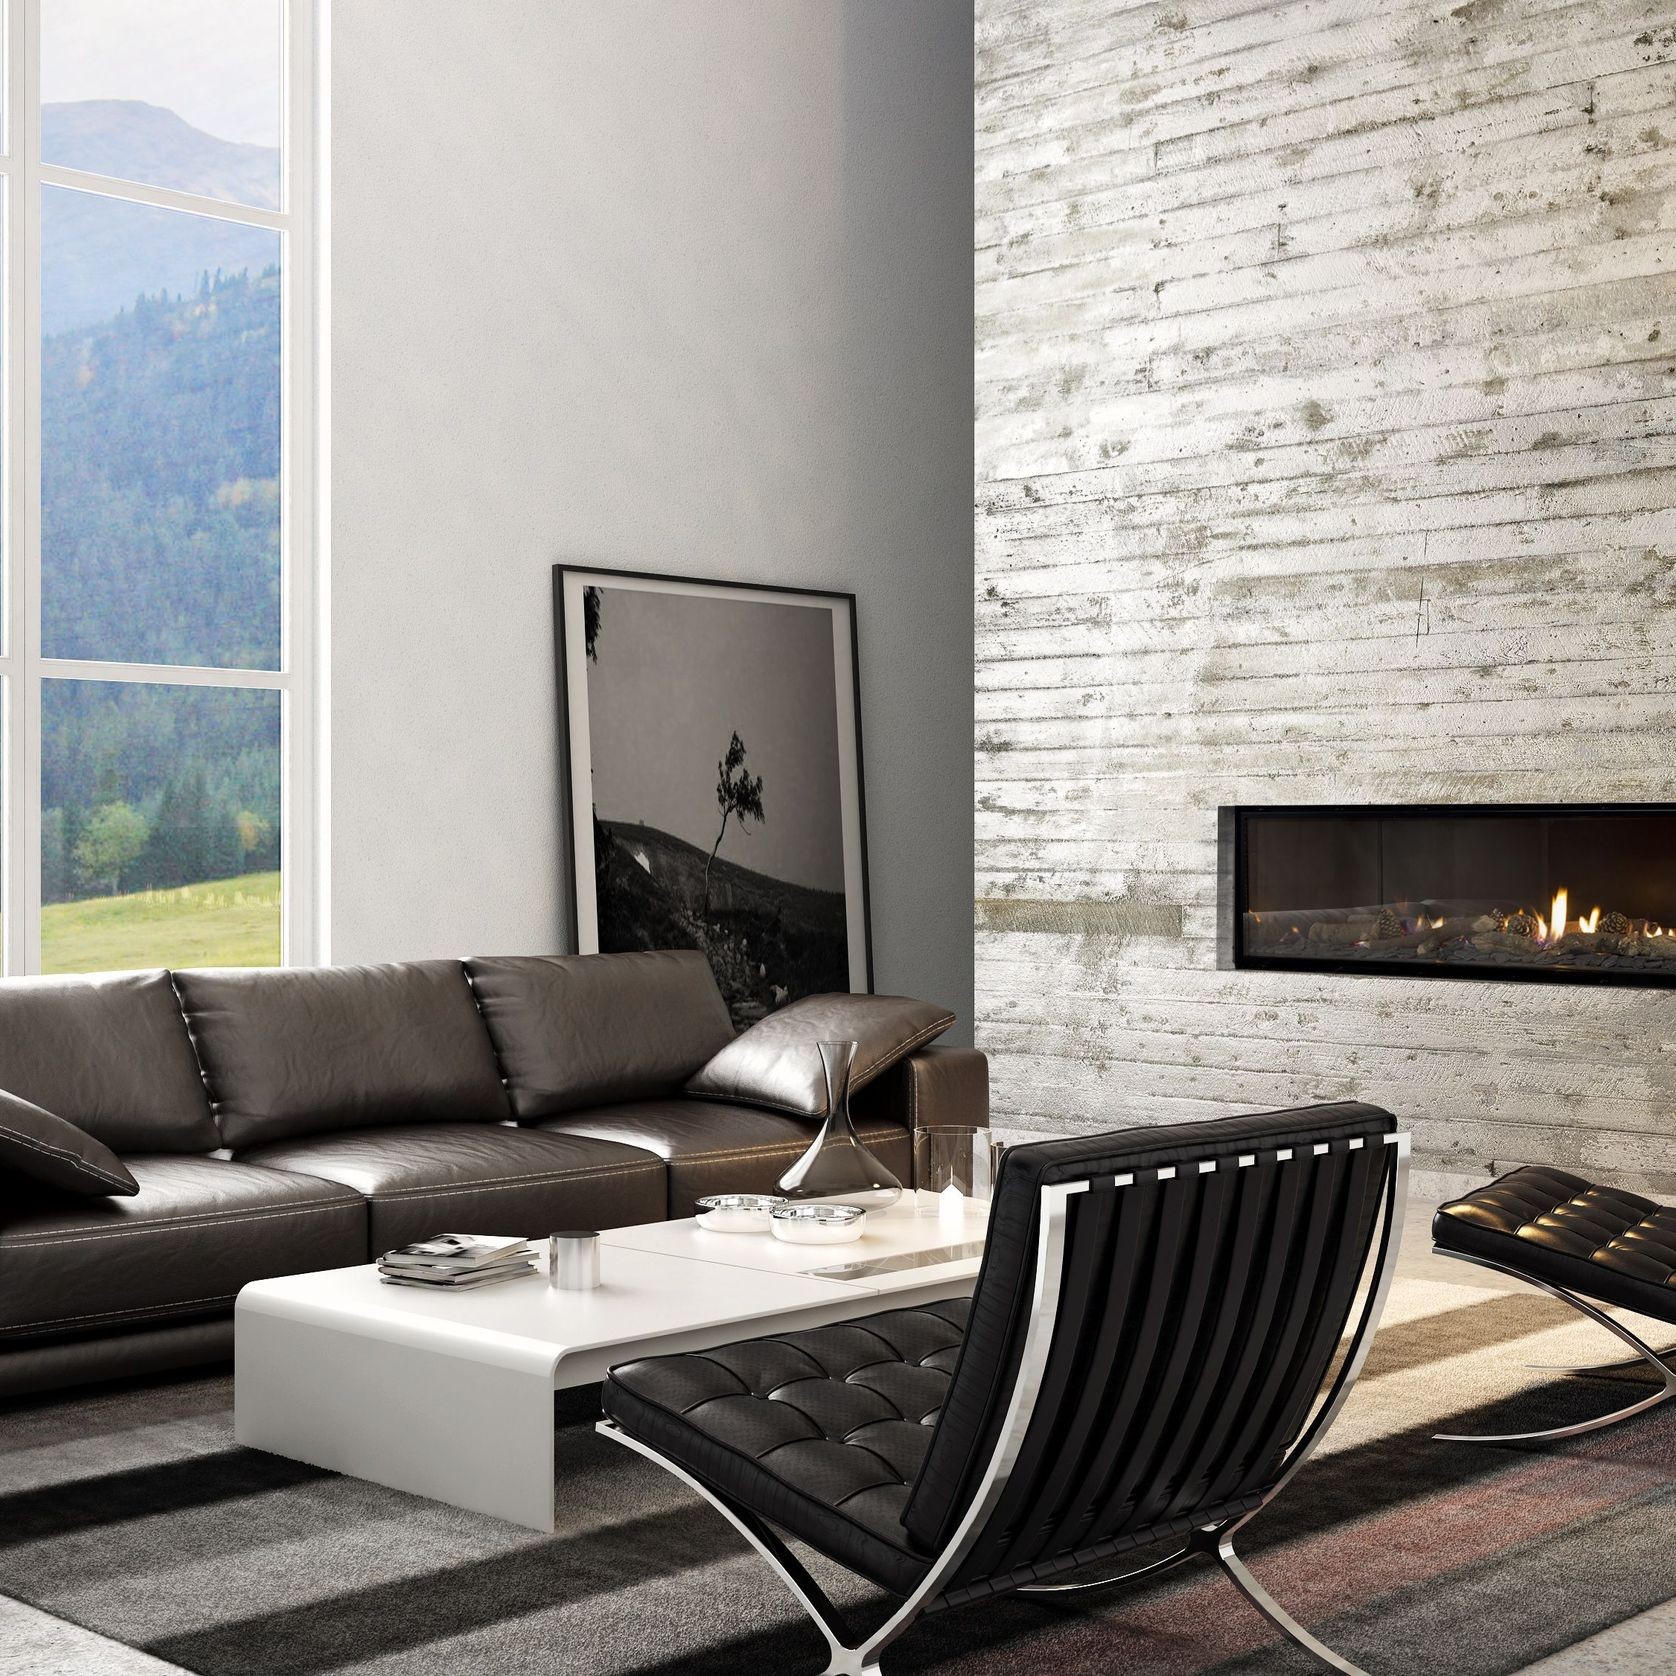 Escea DX1500 Multiroom Gas Fireplace
 gallery detail image